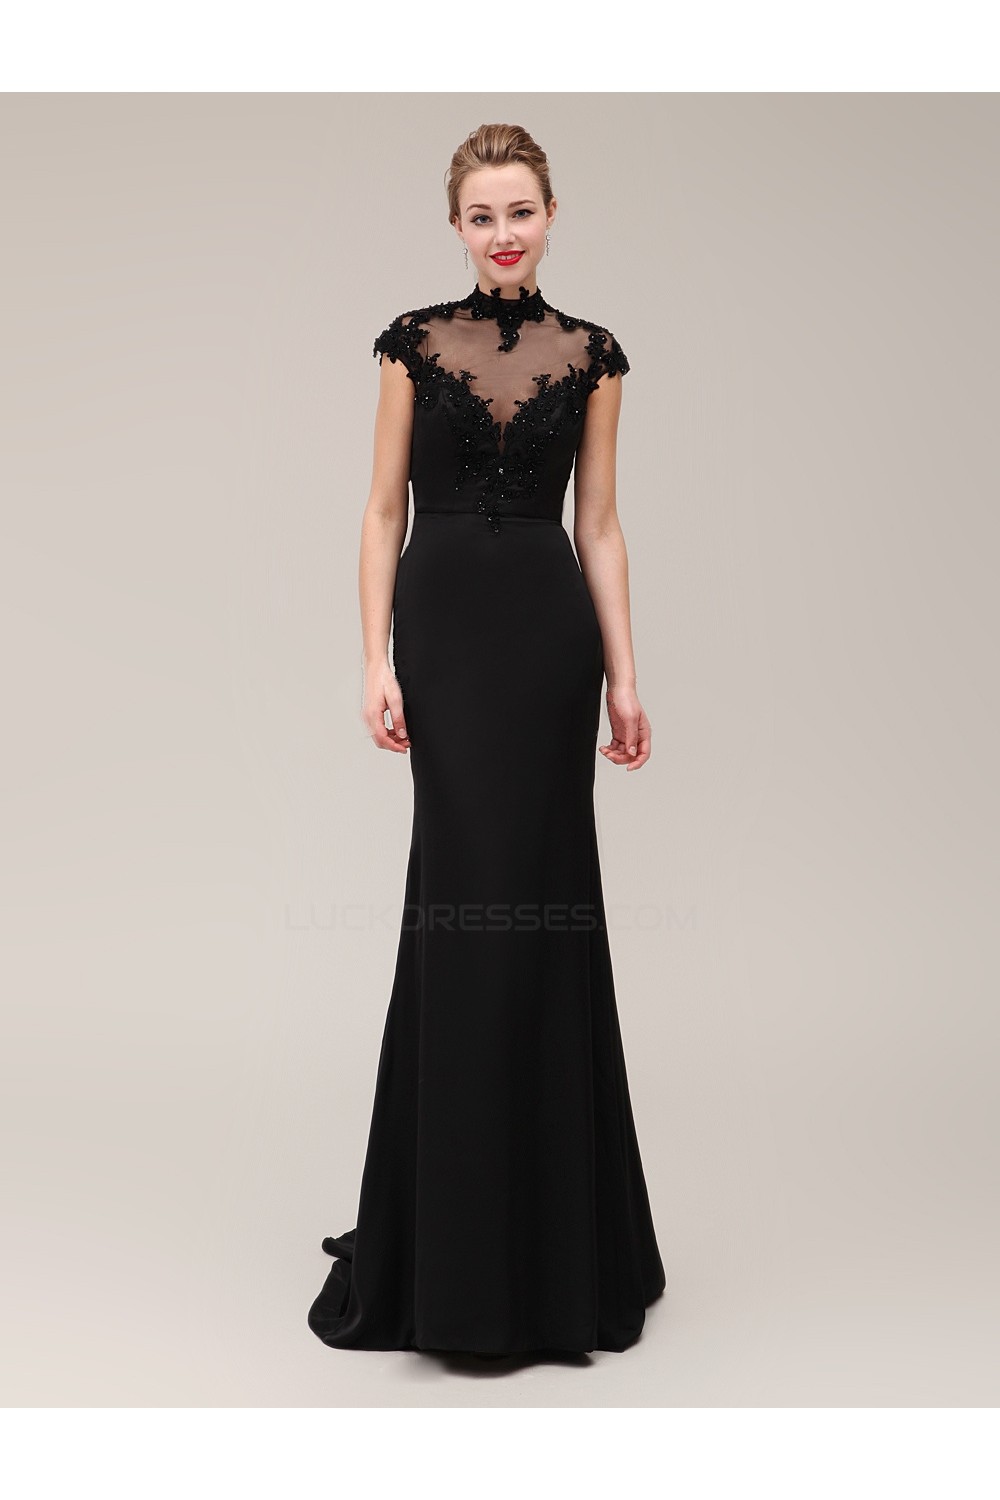 long black beaded dress